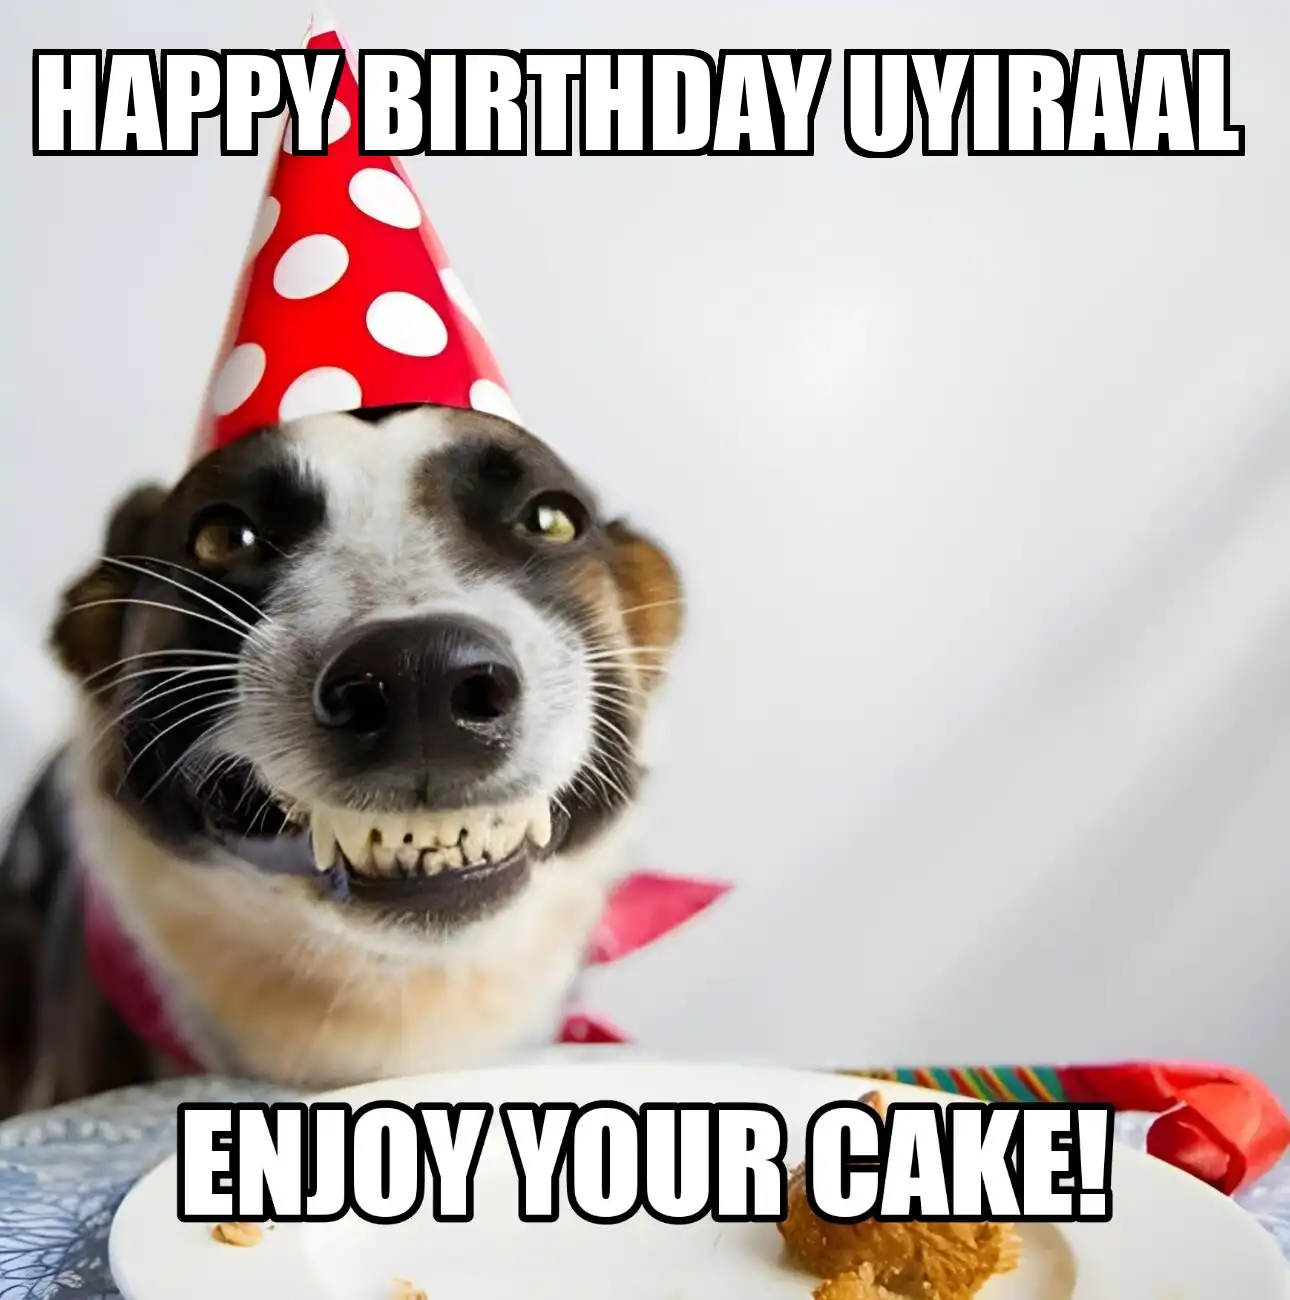 Happy Birthday Uyiraal Enjoy Your Cake Dog Meme